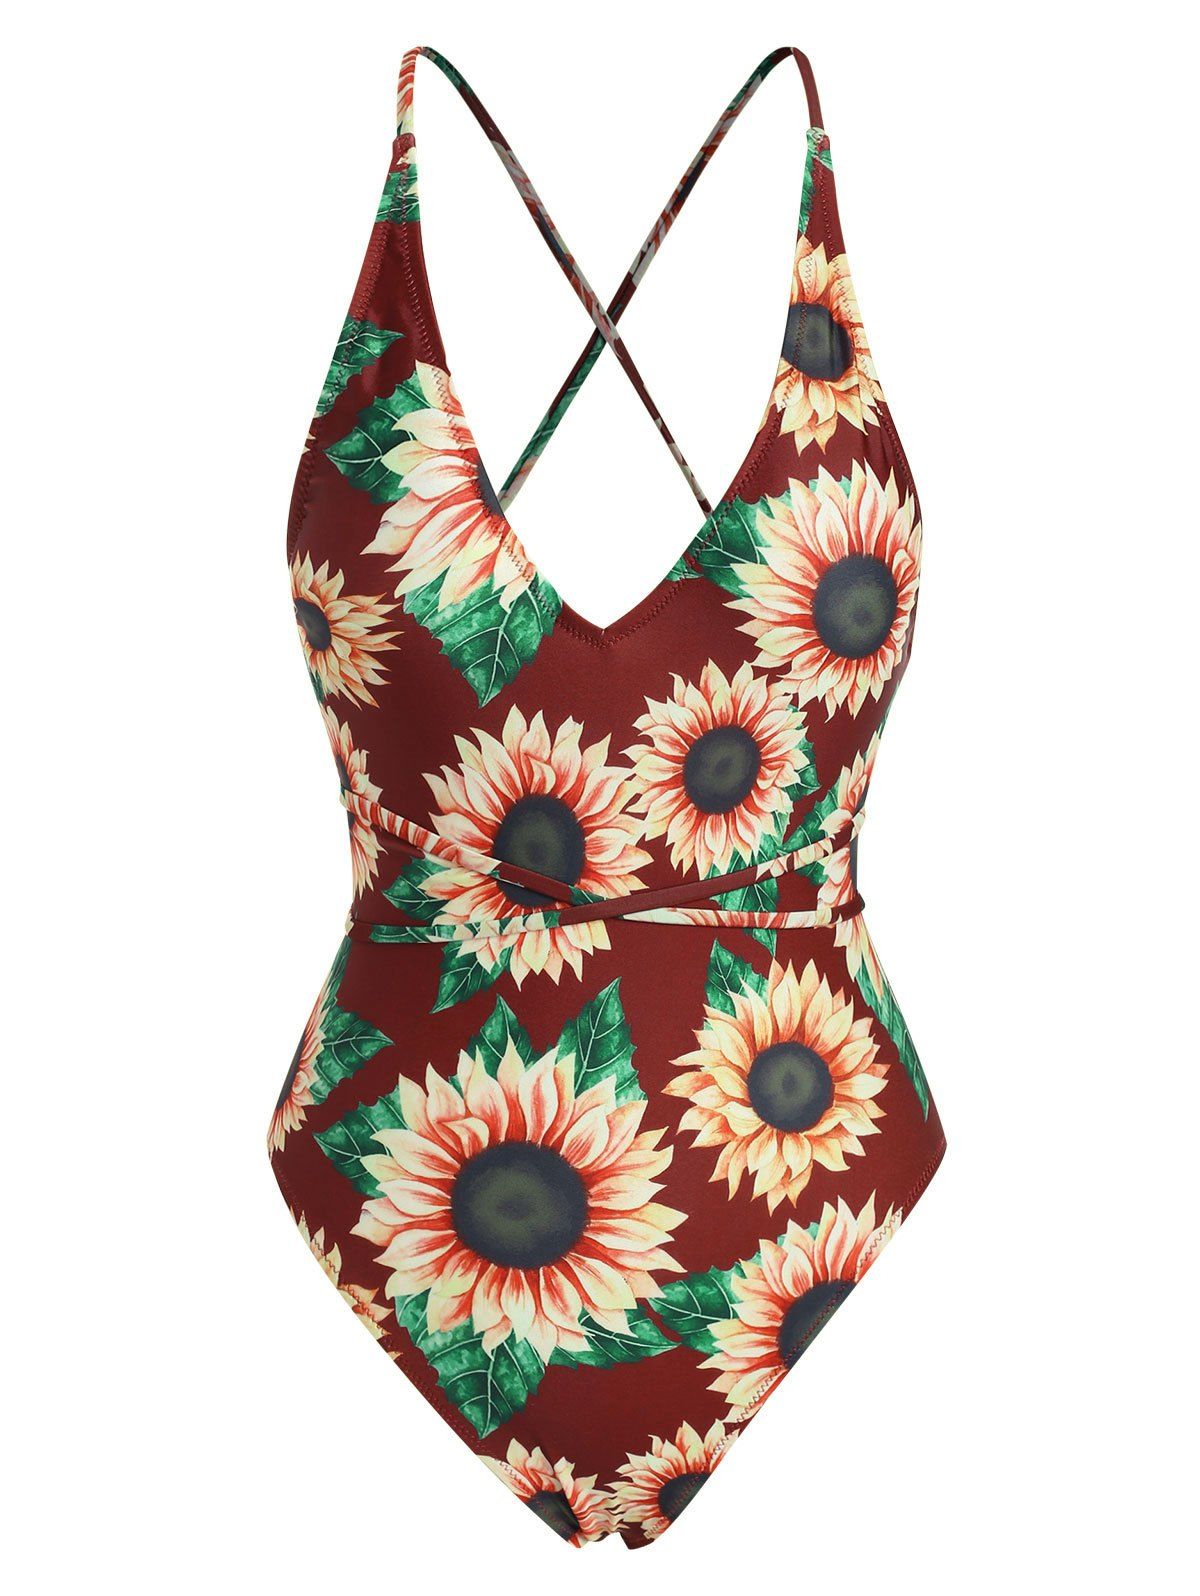 Crisscross Tie Sunflower One-piece Swimsuit - FIREBRICK S